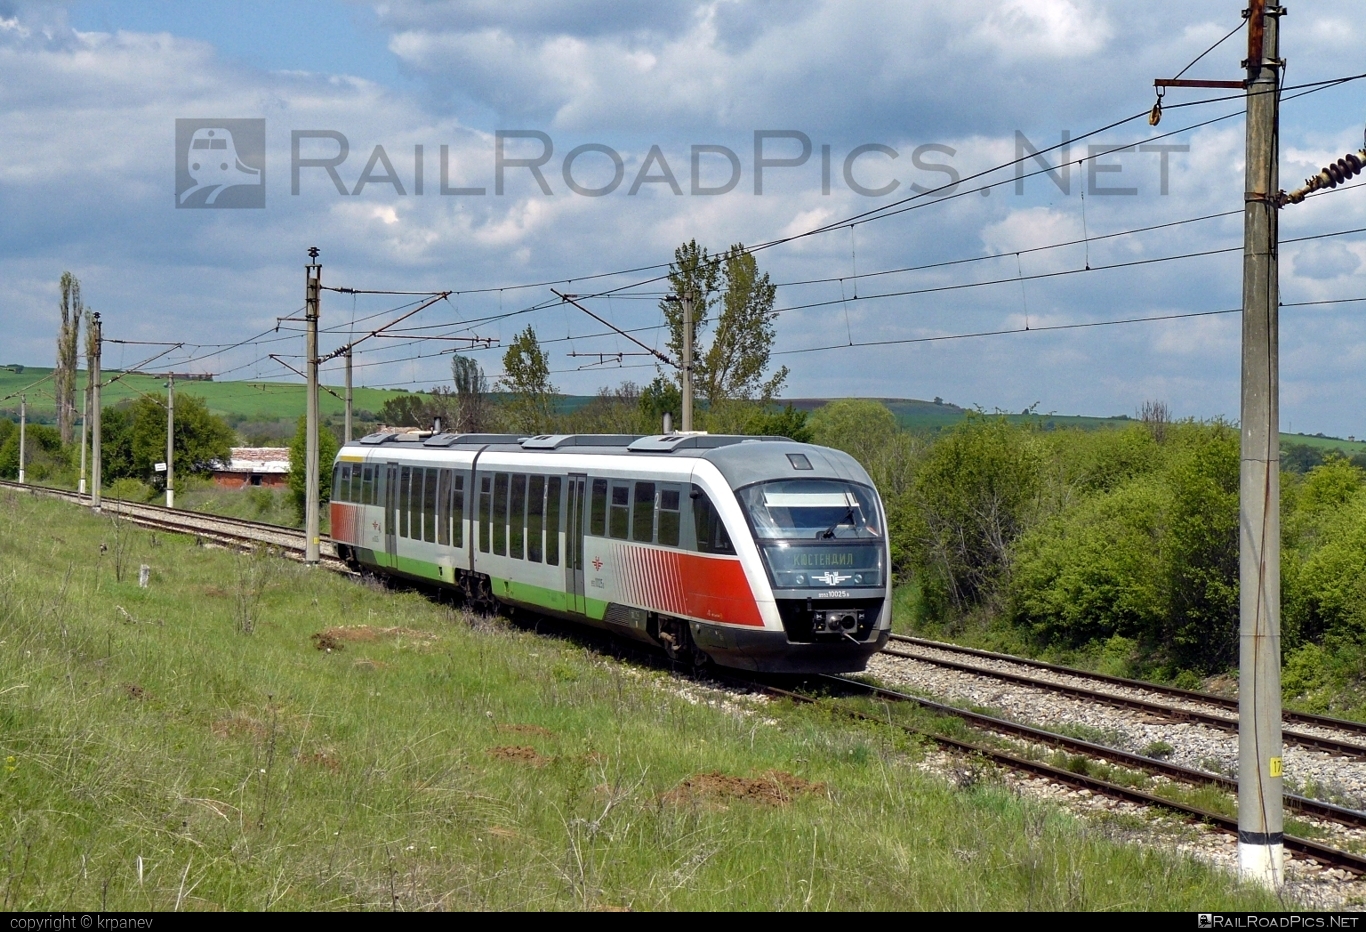 Siemens Desiro Classic - 10 025.8 operated by Chemin de fer de l'Etat bulgare - Bulgarski Durzhavni Zheleznitsi #bdz #desiro #desiroclassic #siemens #siemensdesiro #siemensdesiroclassic